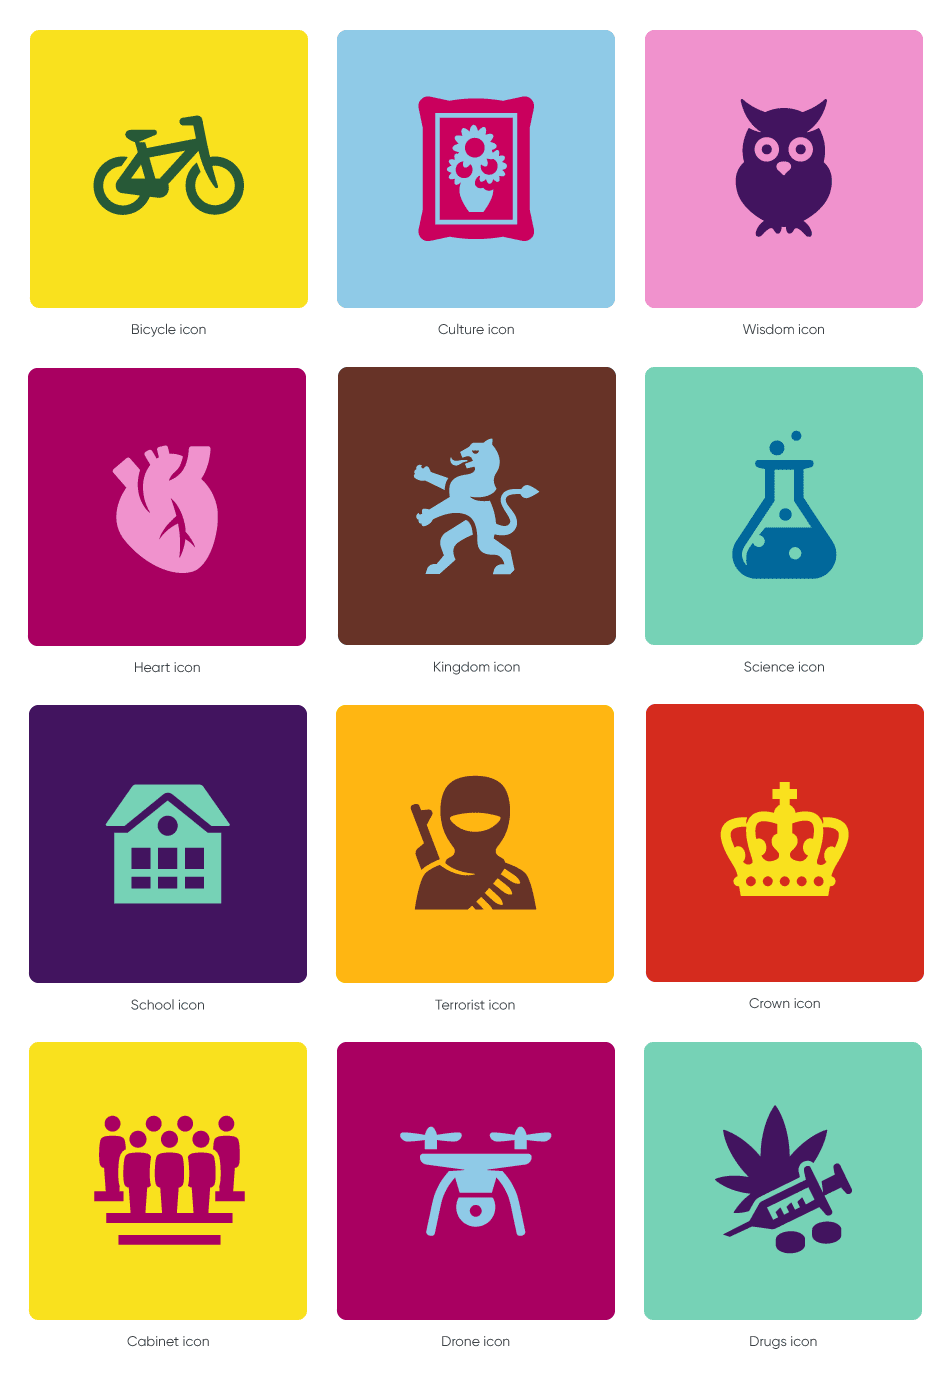 Bicycle icon, Culture icon, Wisdom icon, Heart icon, Kingdom icon, Science icon, School icon, Terrorist icon, Crown icon, Cabinet icon, Drone icon and Drugs icon by #Dutchicon for #Rijksoverheid . #icondesign www.dutchicon.com